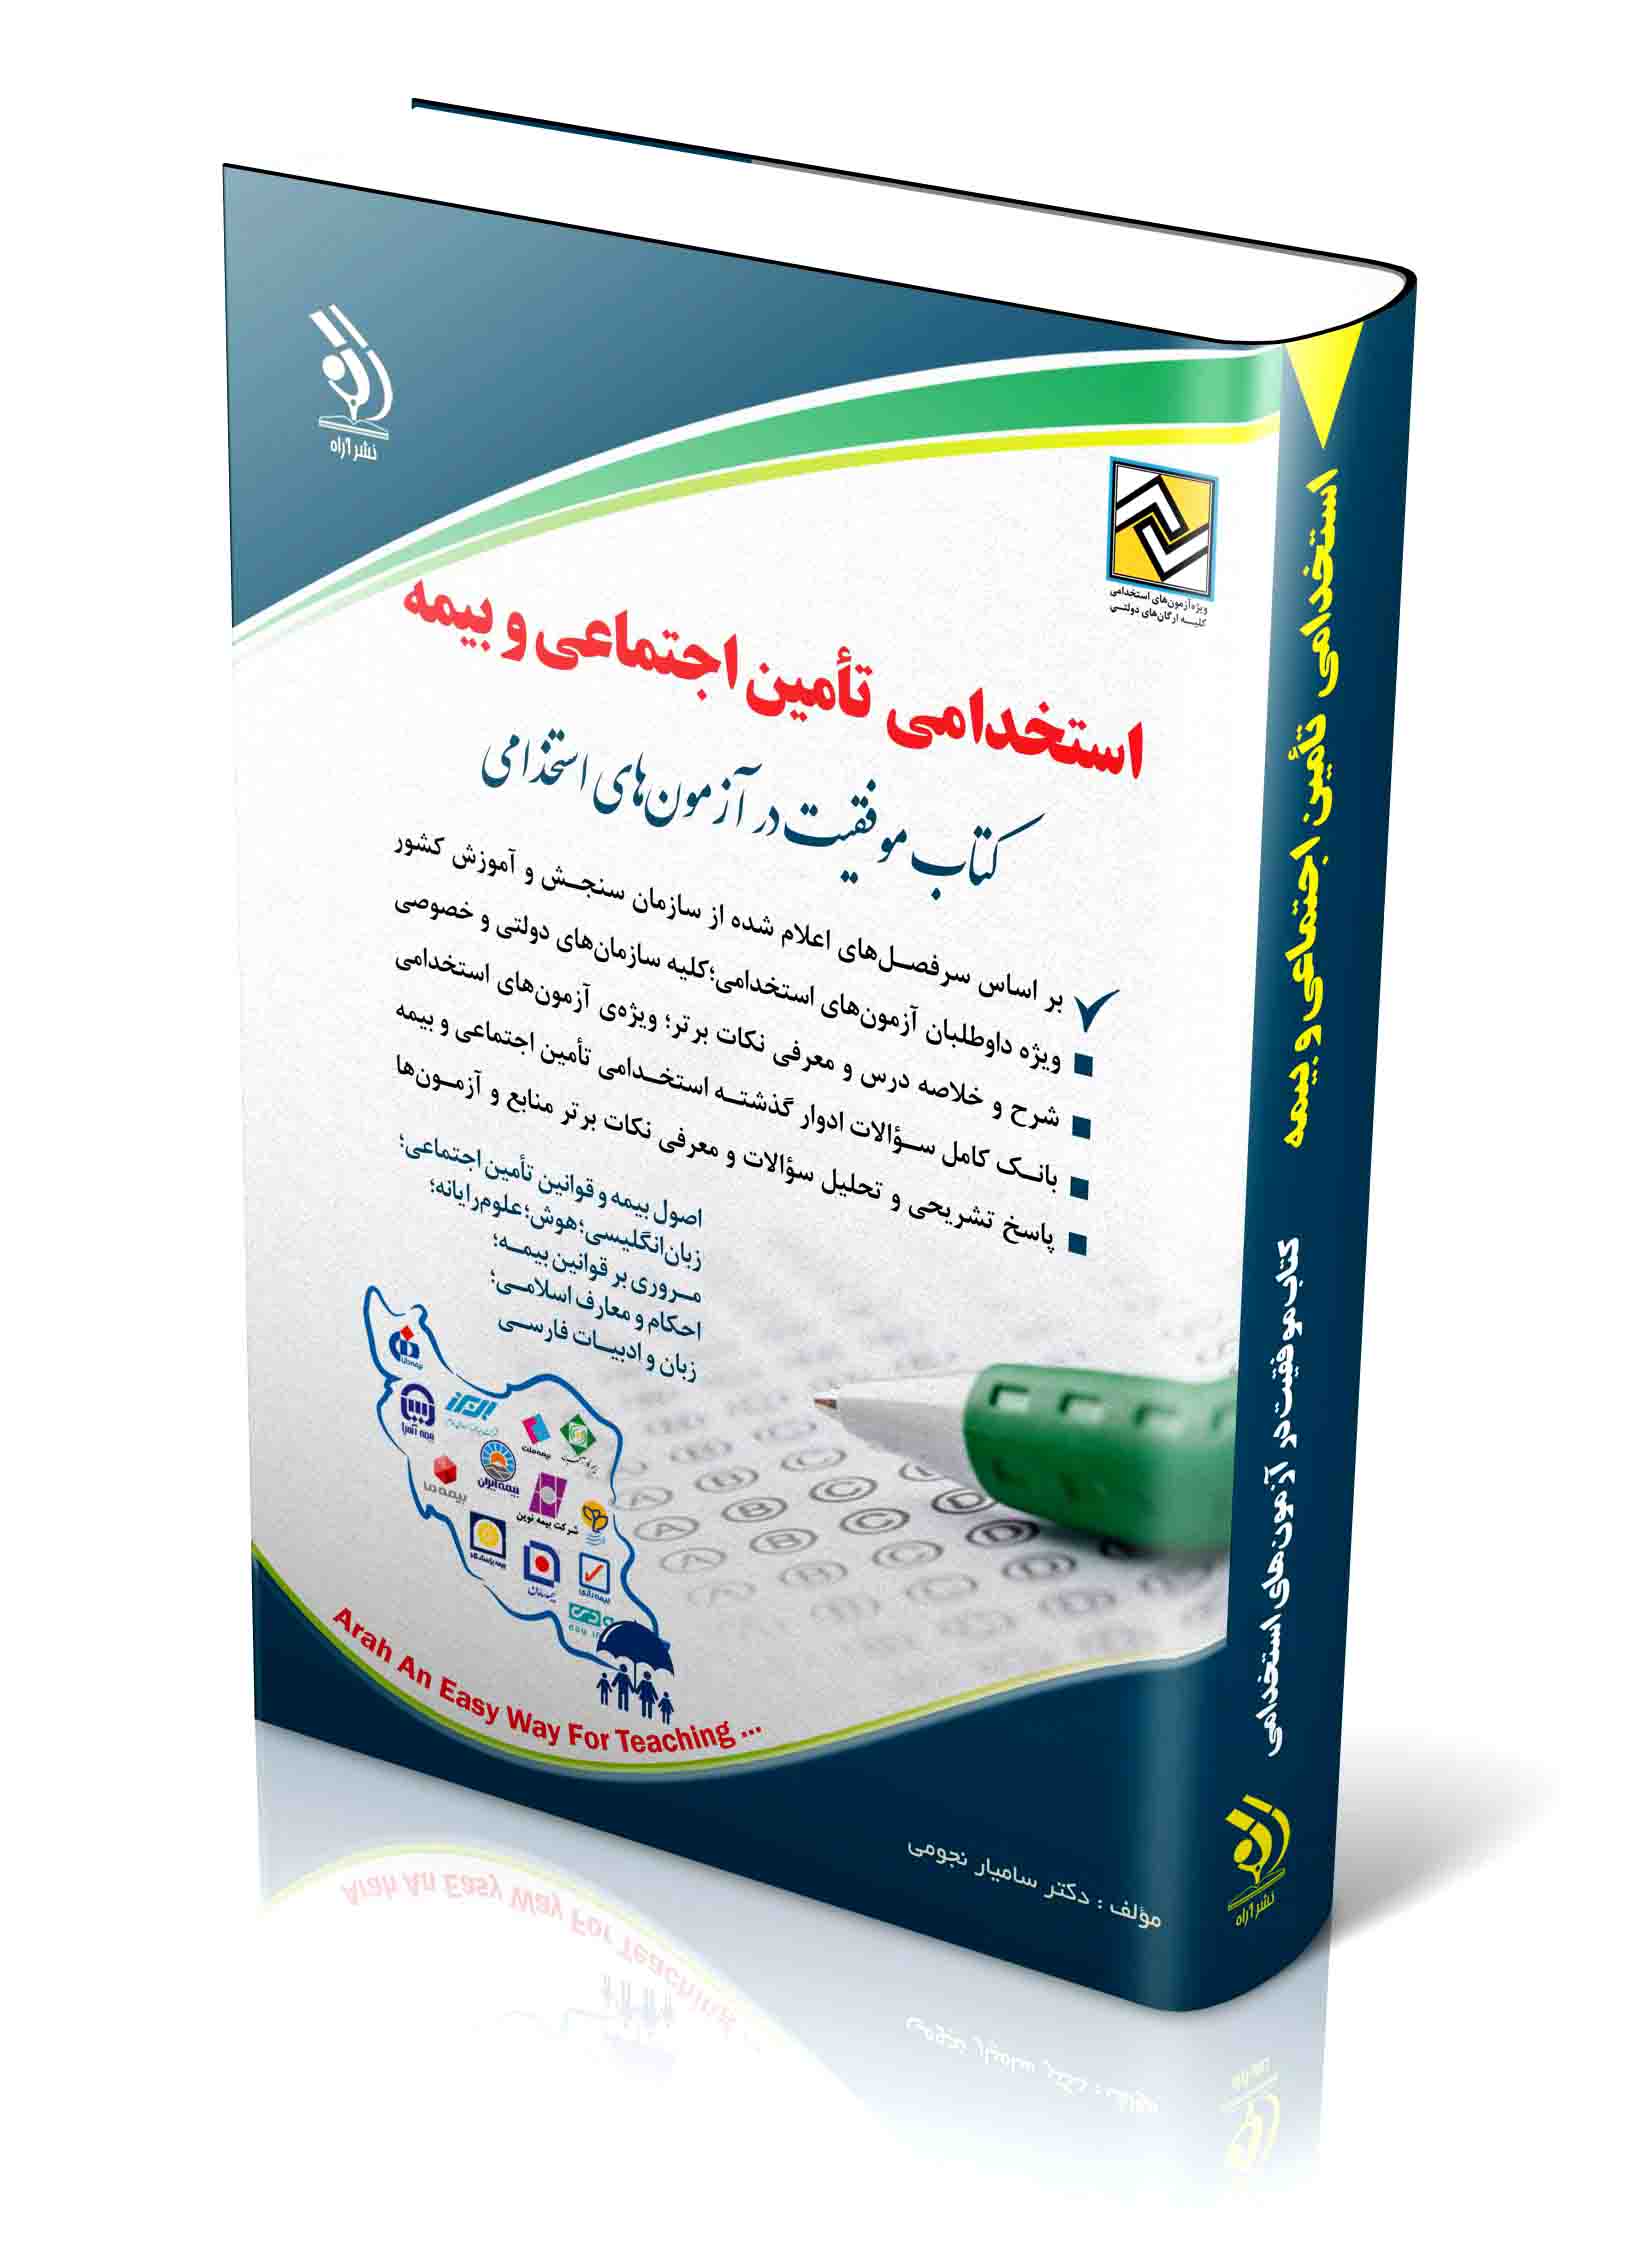 -min-scaled_998849775 کتاب موفقیت در آزمون های استخدامی ( استخدامی دبیر عربی ) - انتشارات علم و دانش